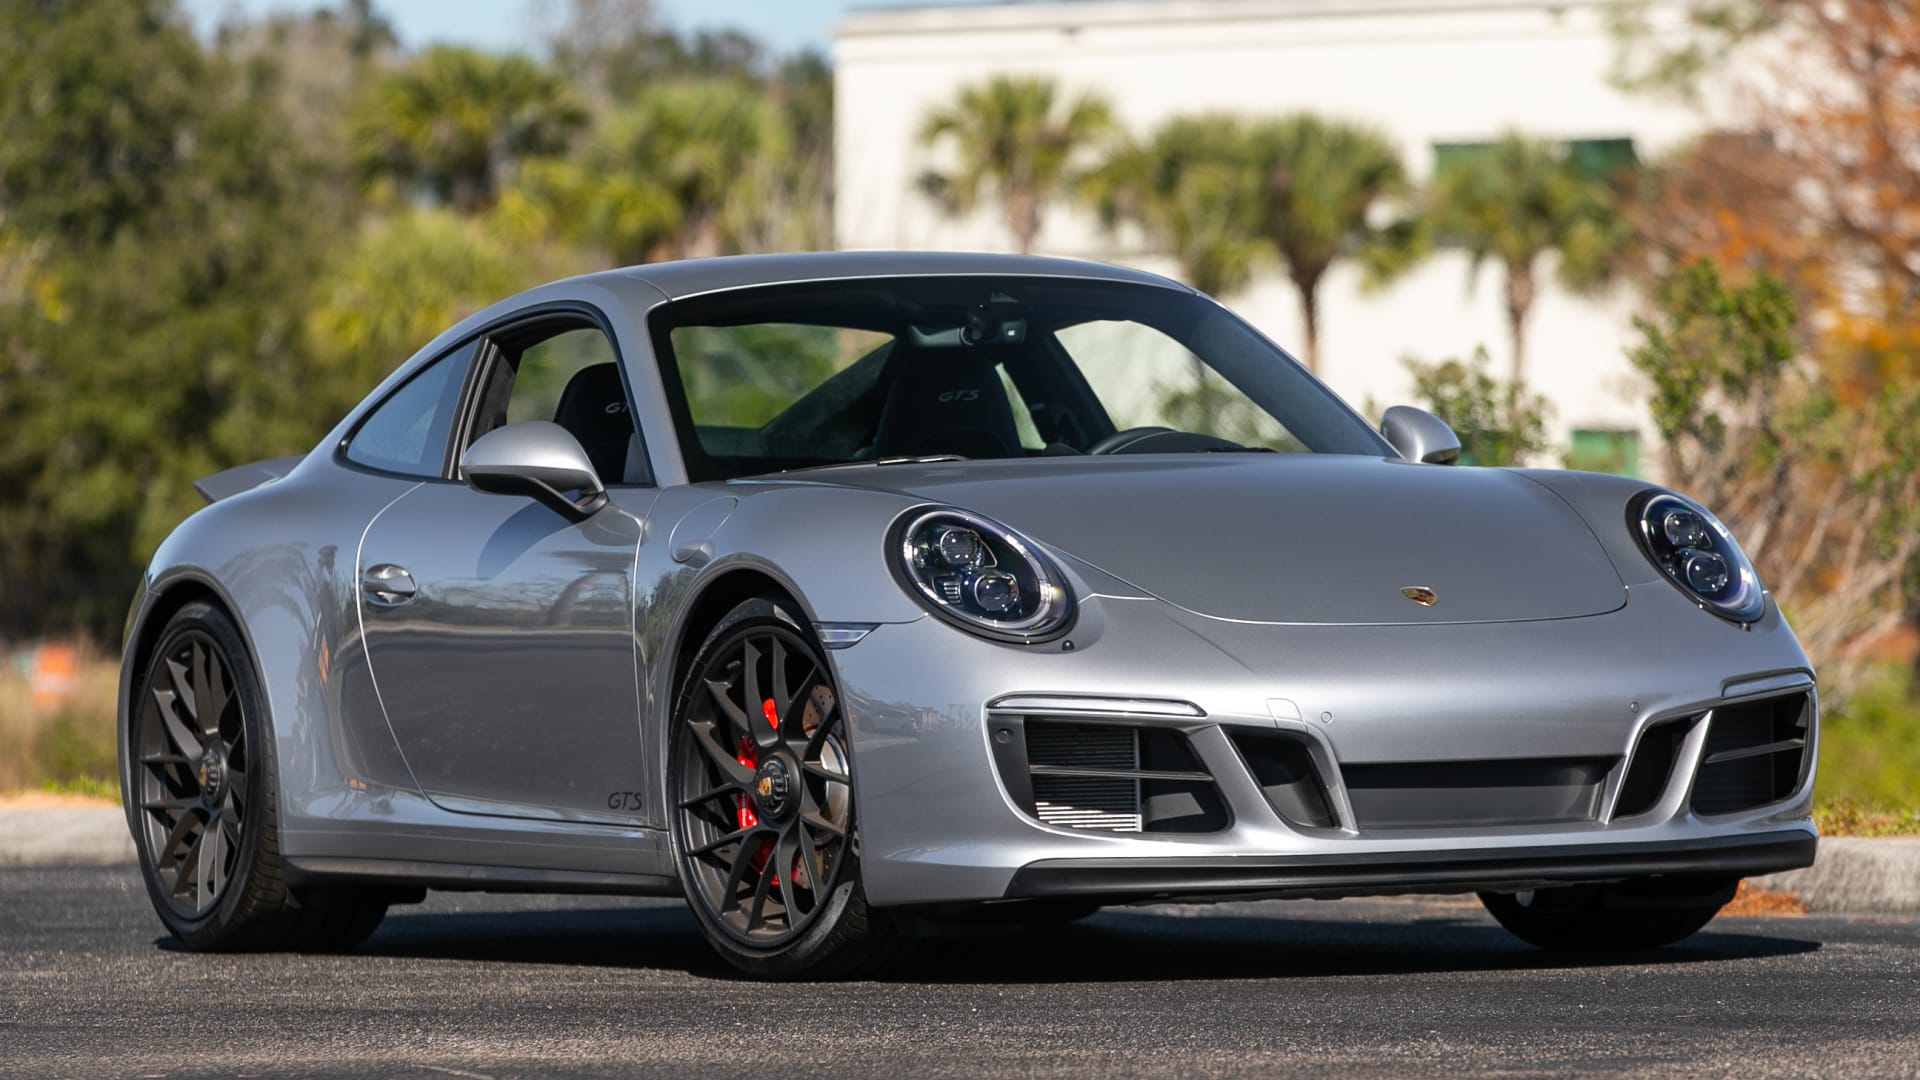 2018 Porsche 911 GTS at Indy 2023 as T152 - Mecum Auctions